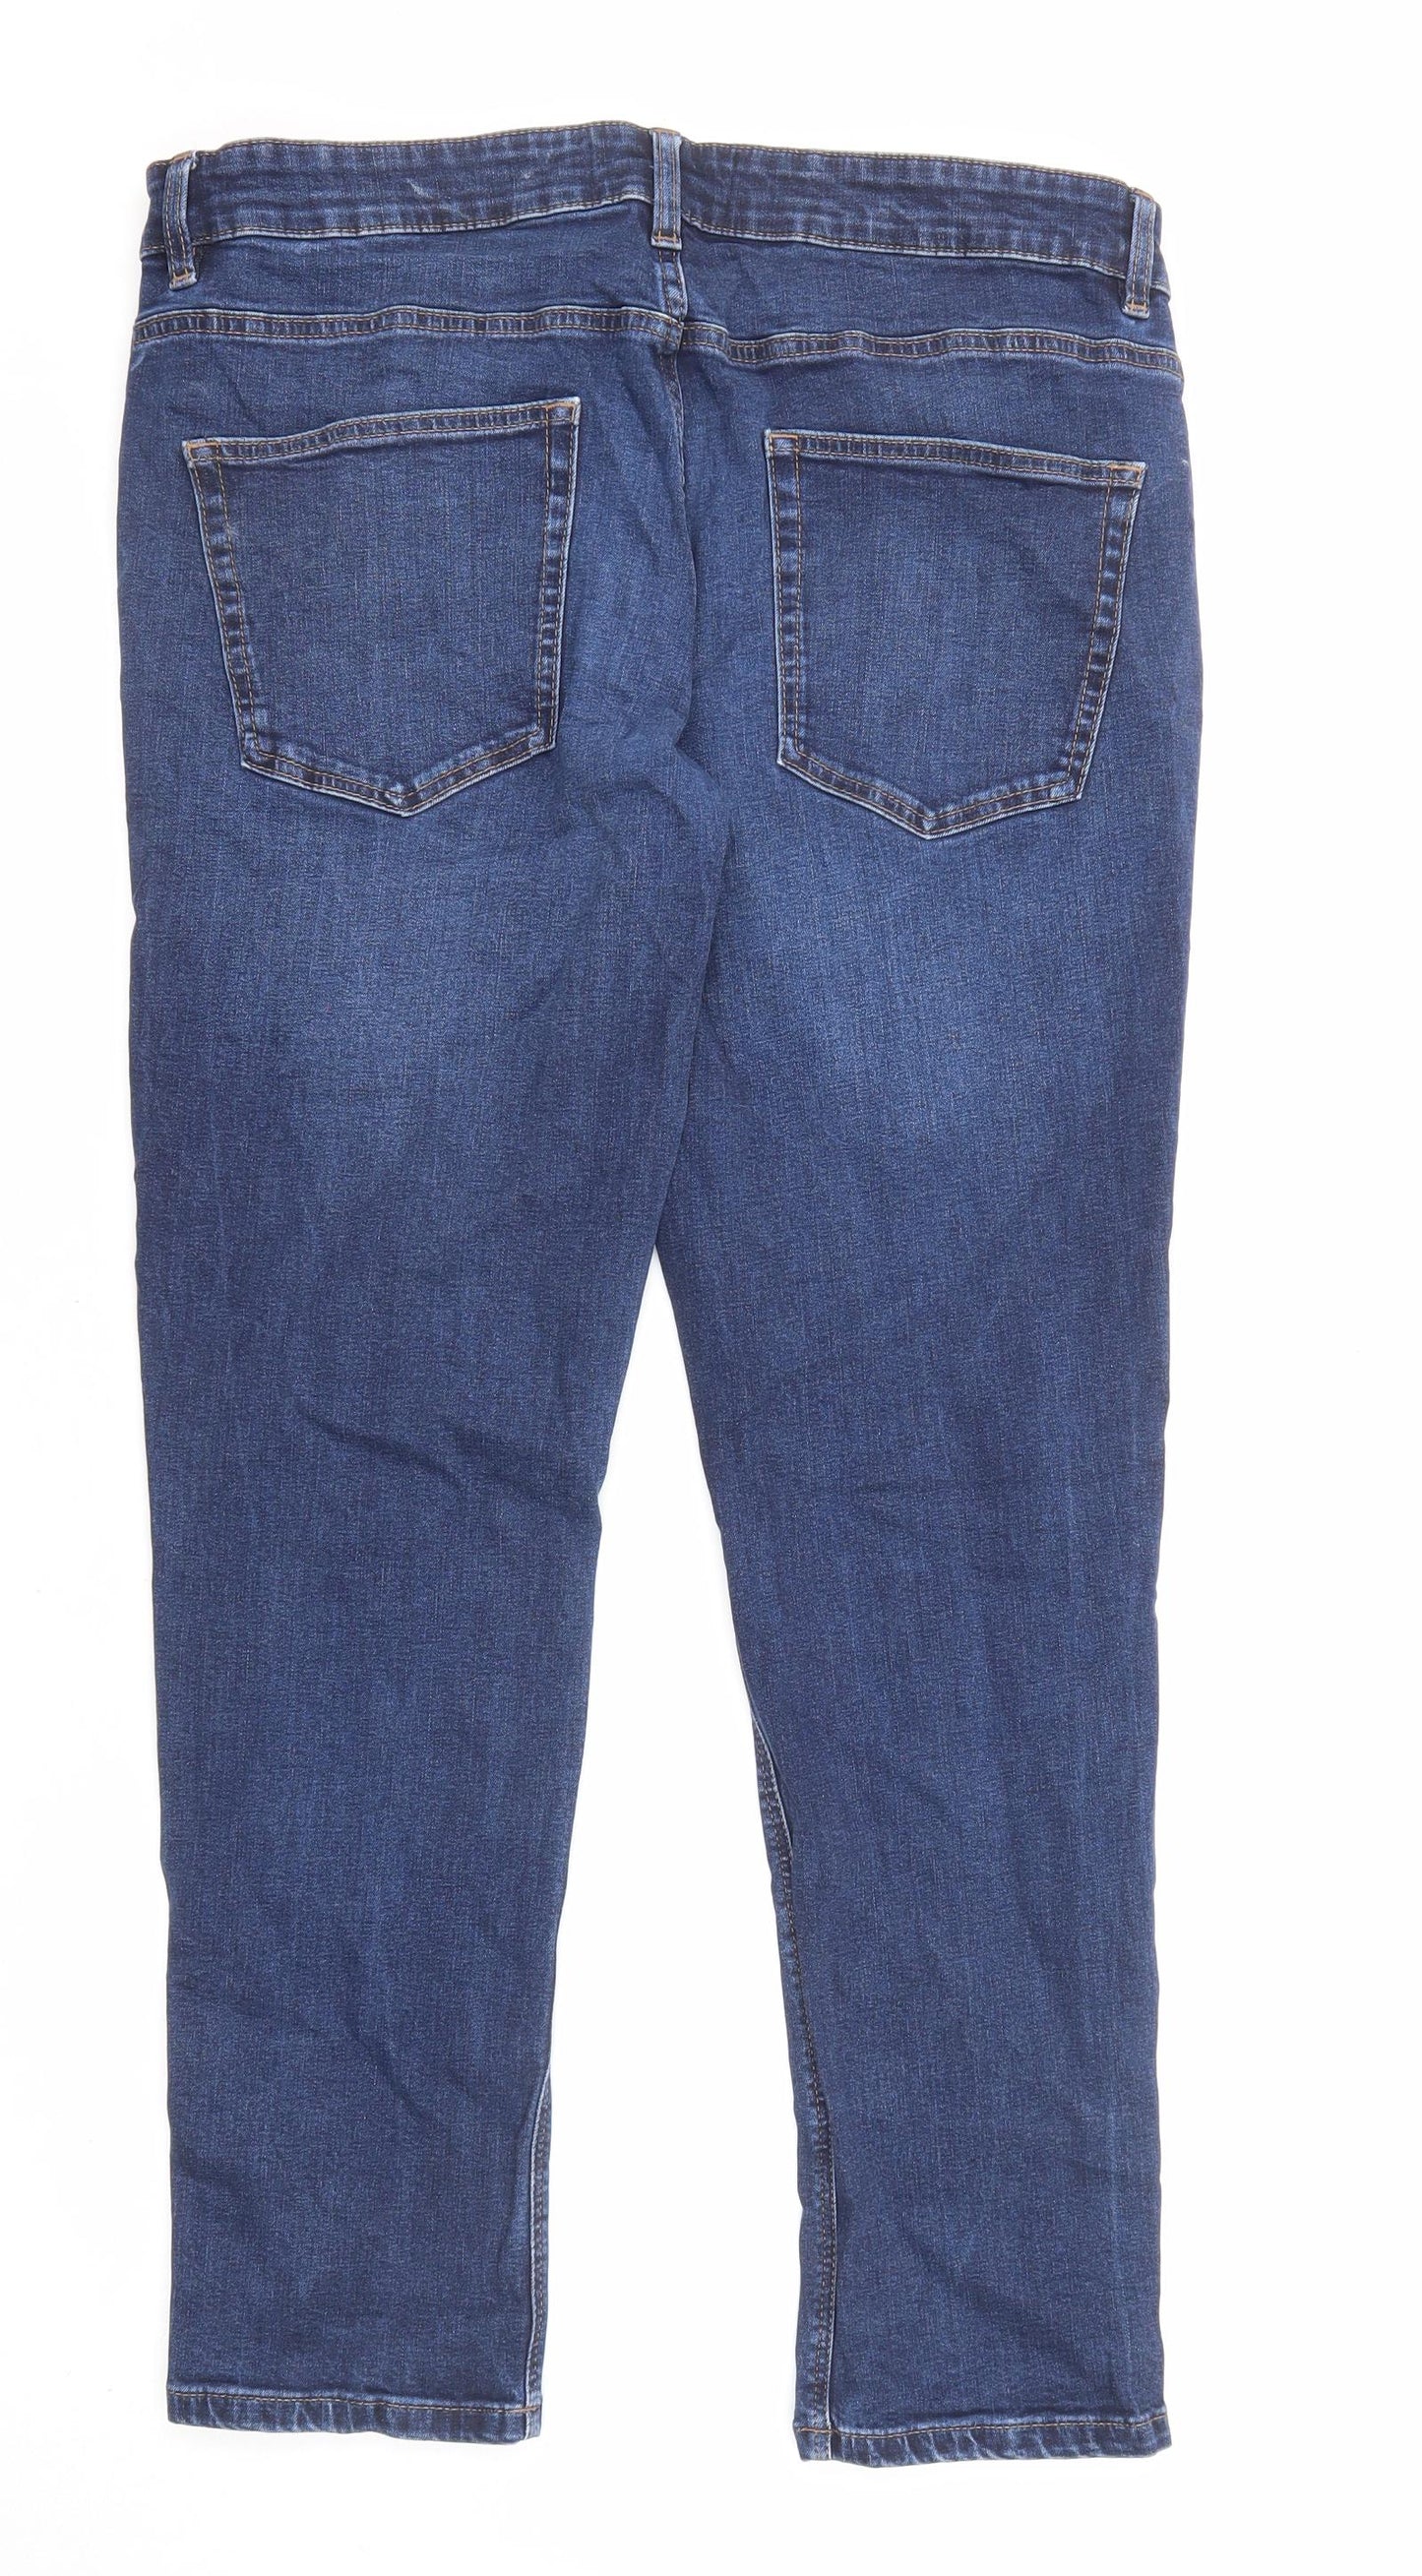 NEXT Mens Blue Cotton Skinny Jeans Size 36 in L29 in Regular Zip